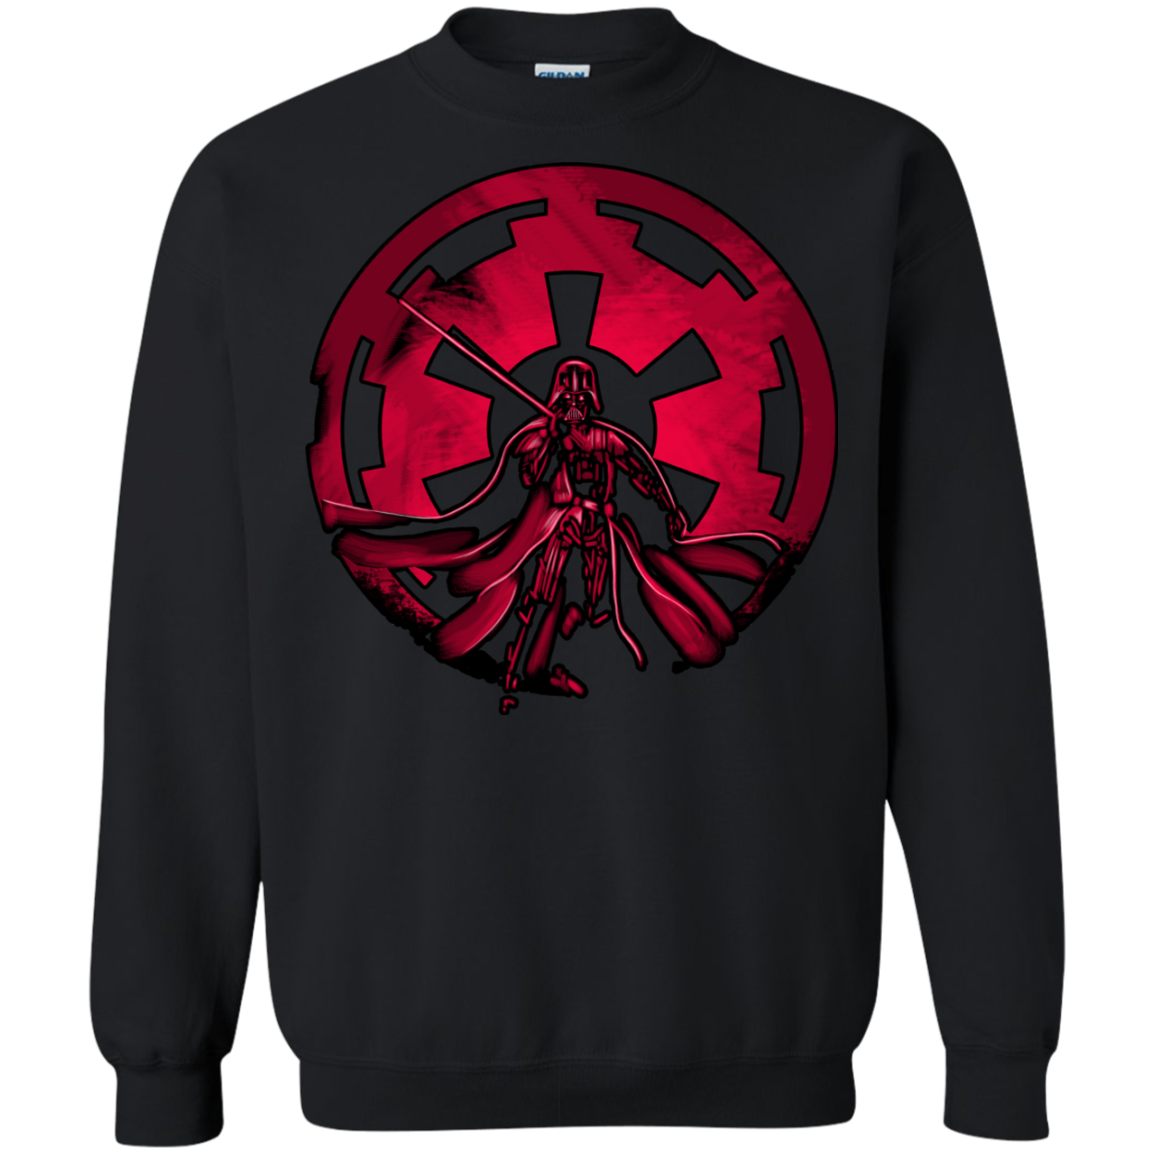 The Imperial Crewneck Sweatshirt